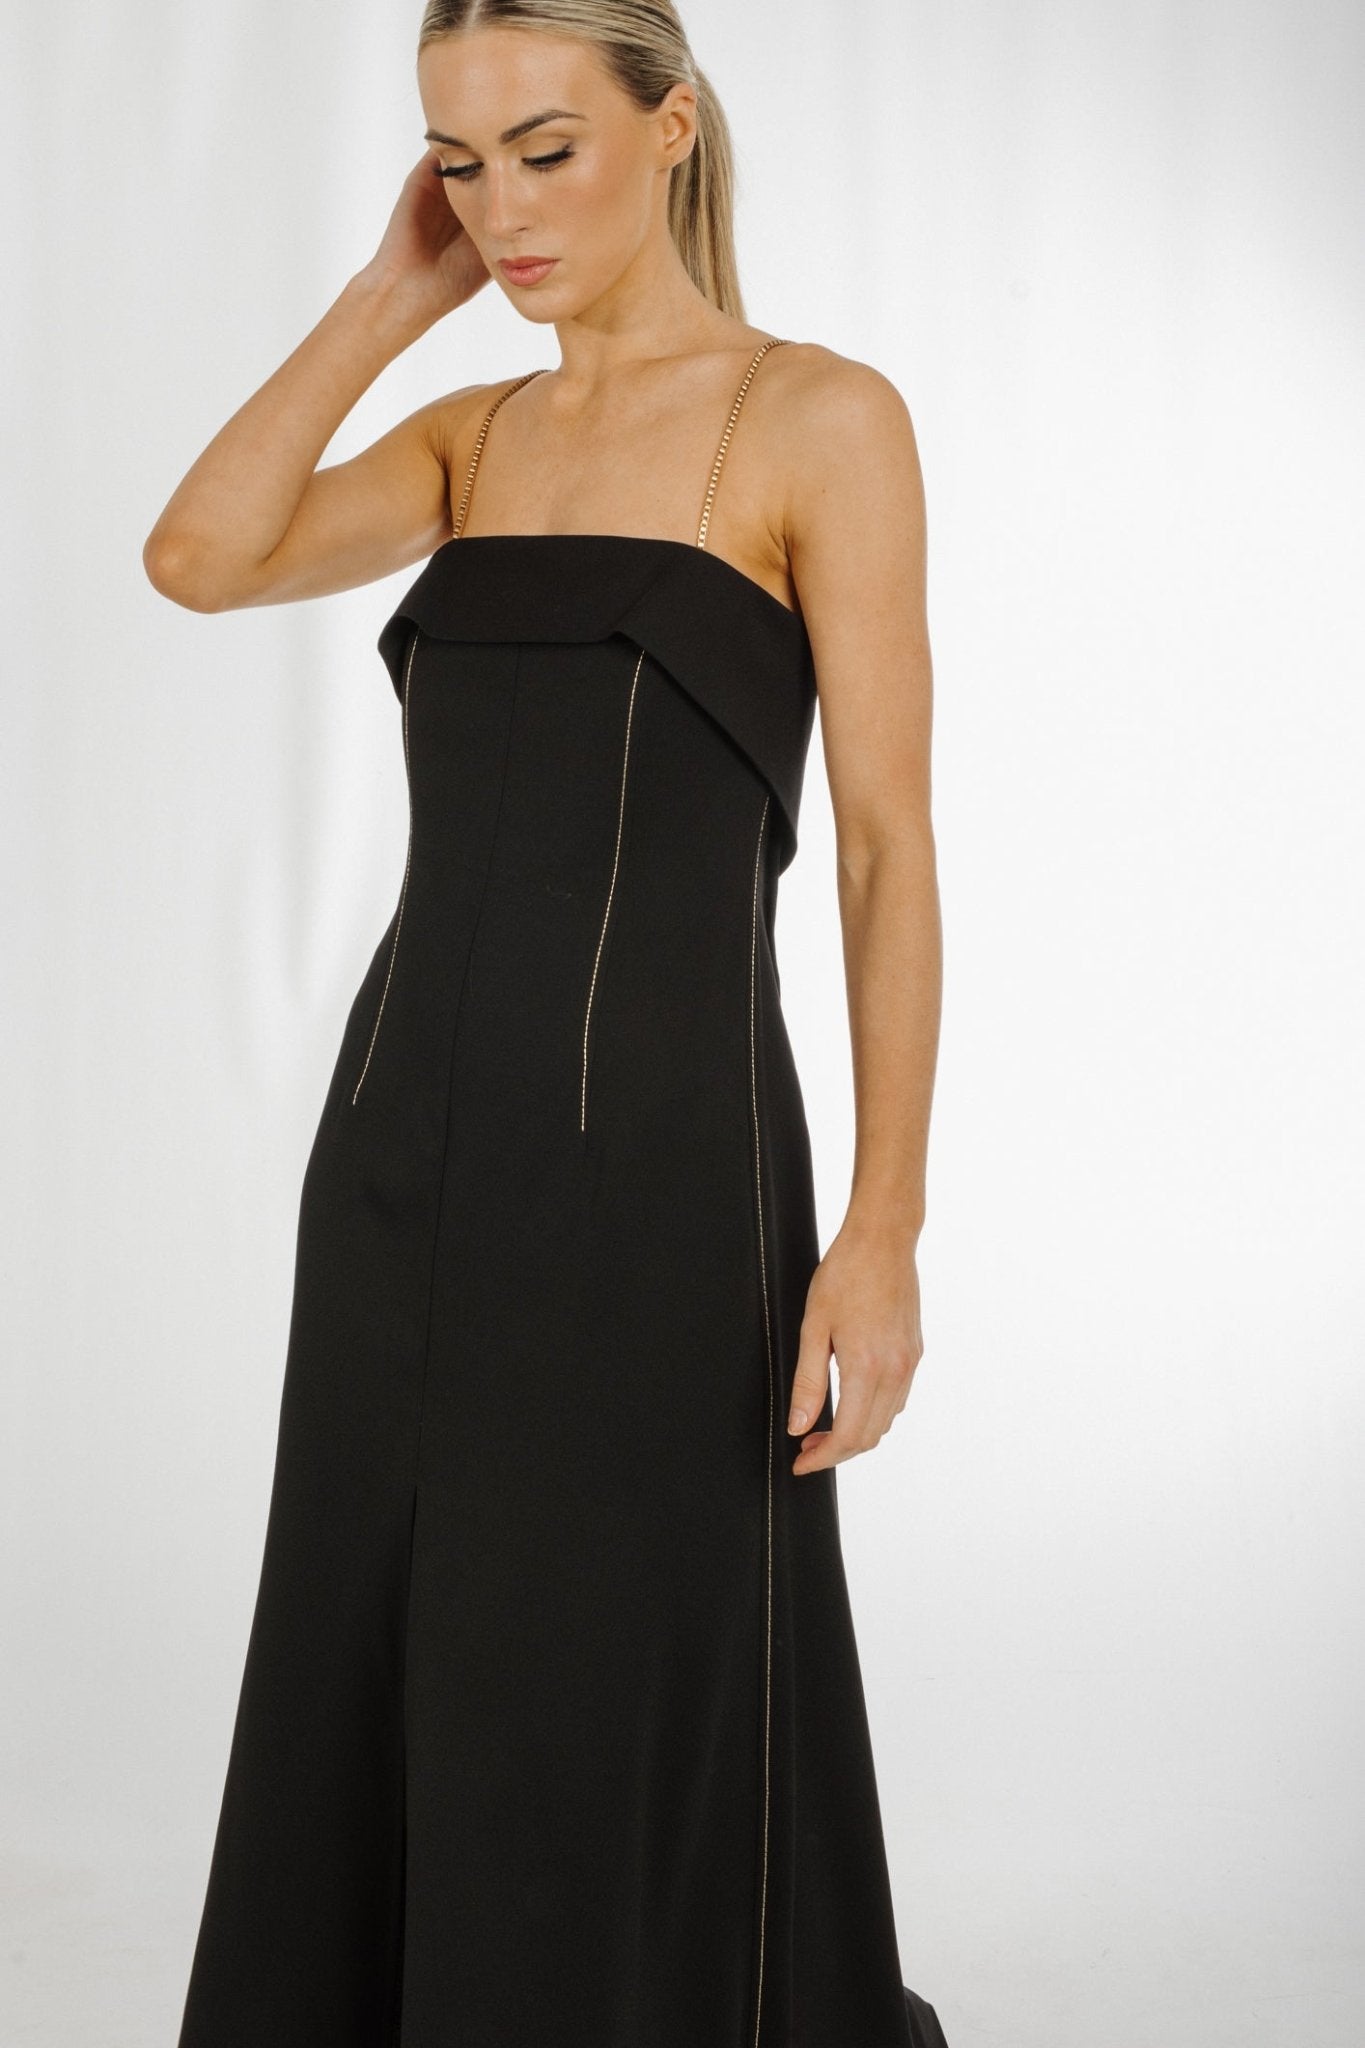 Kayla Chain Strap Dress In Black - The Walk in Wardrobe